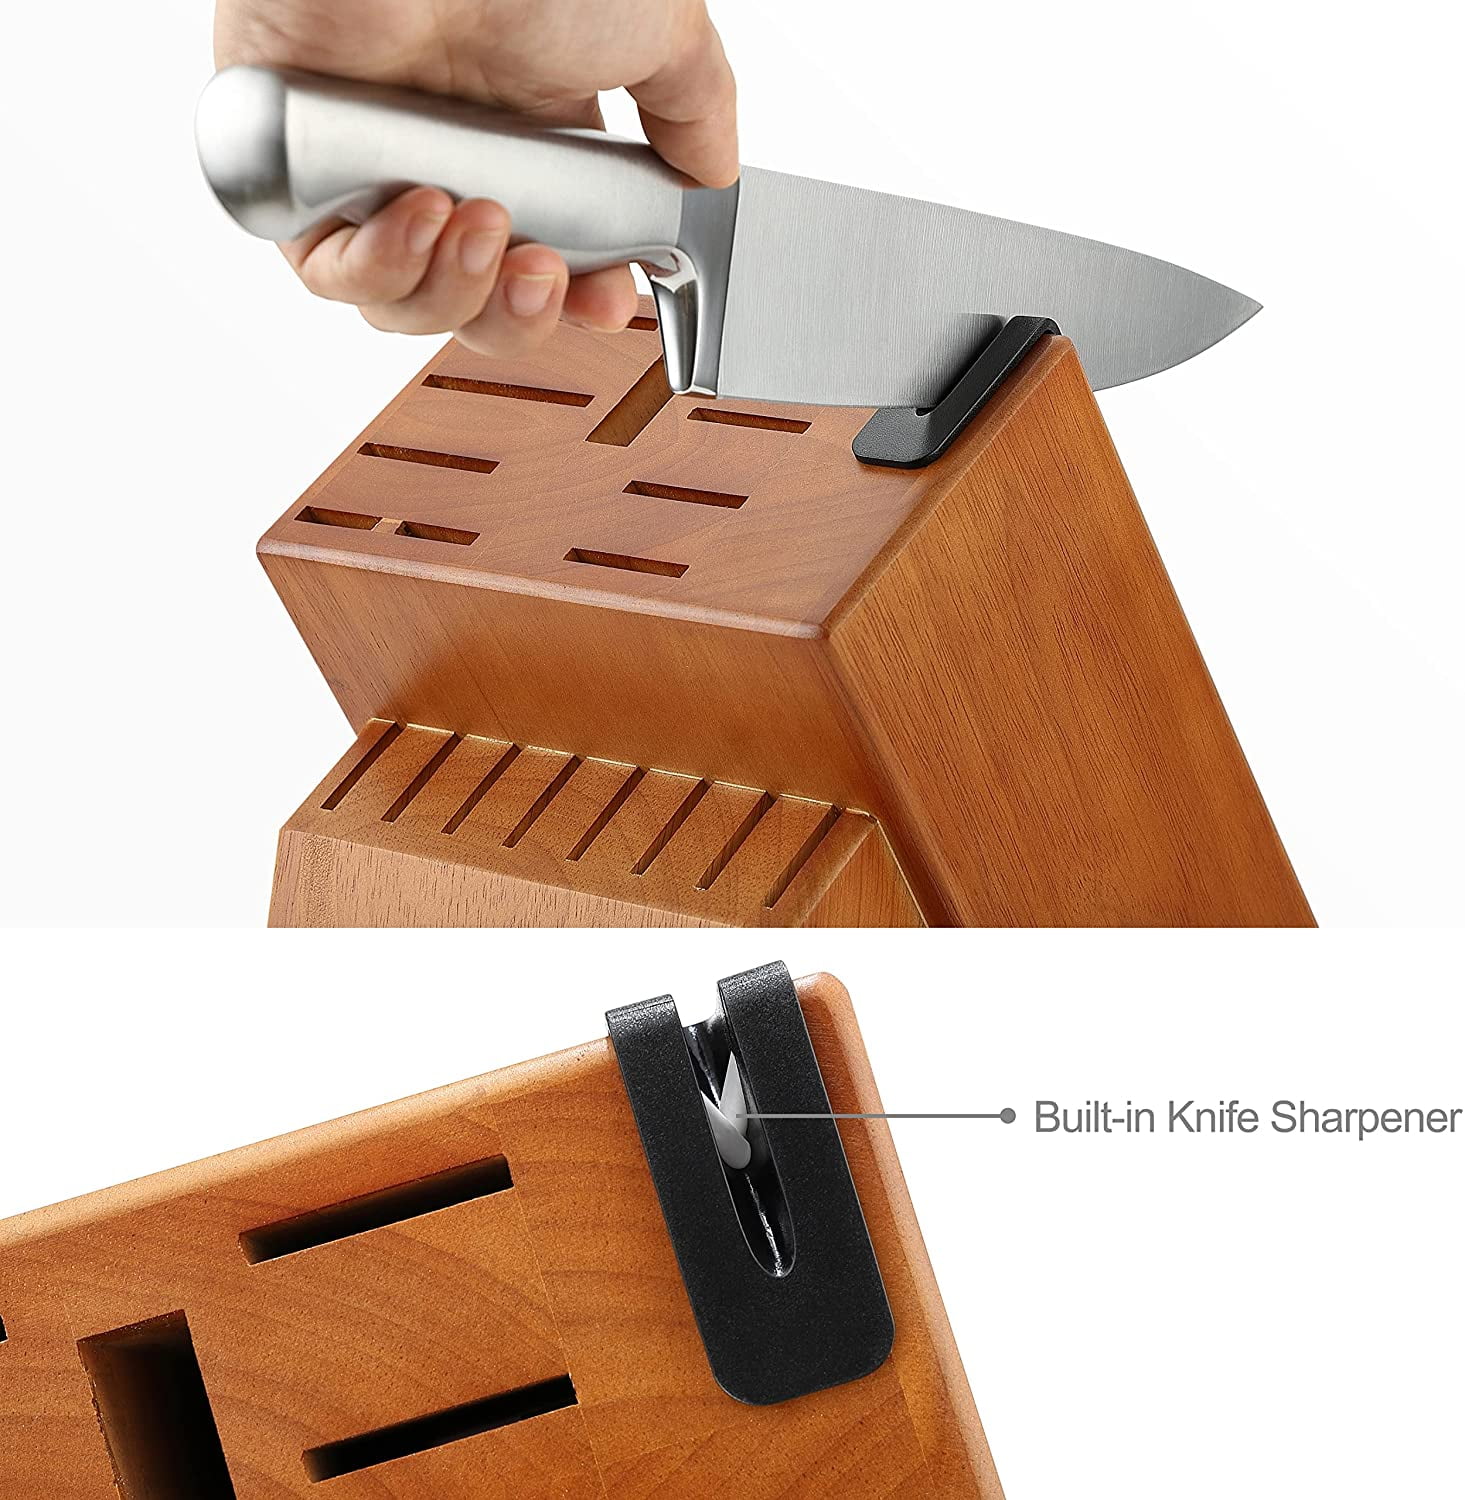  McCook® Knife Sets,German Stainless Steel Kitchen Knife Block  Set with Built-in Sharpener: Home & Kitchen